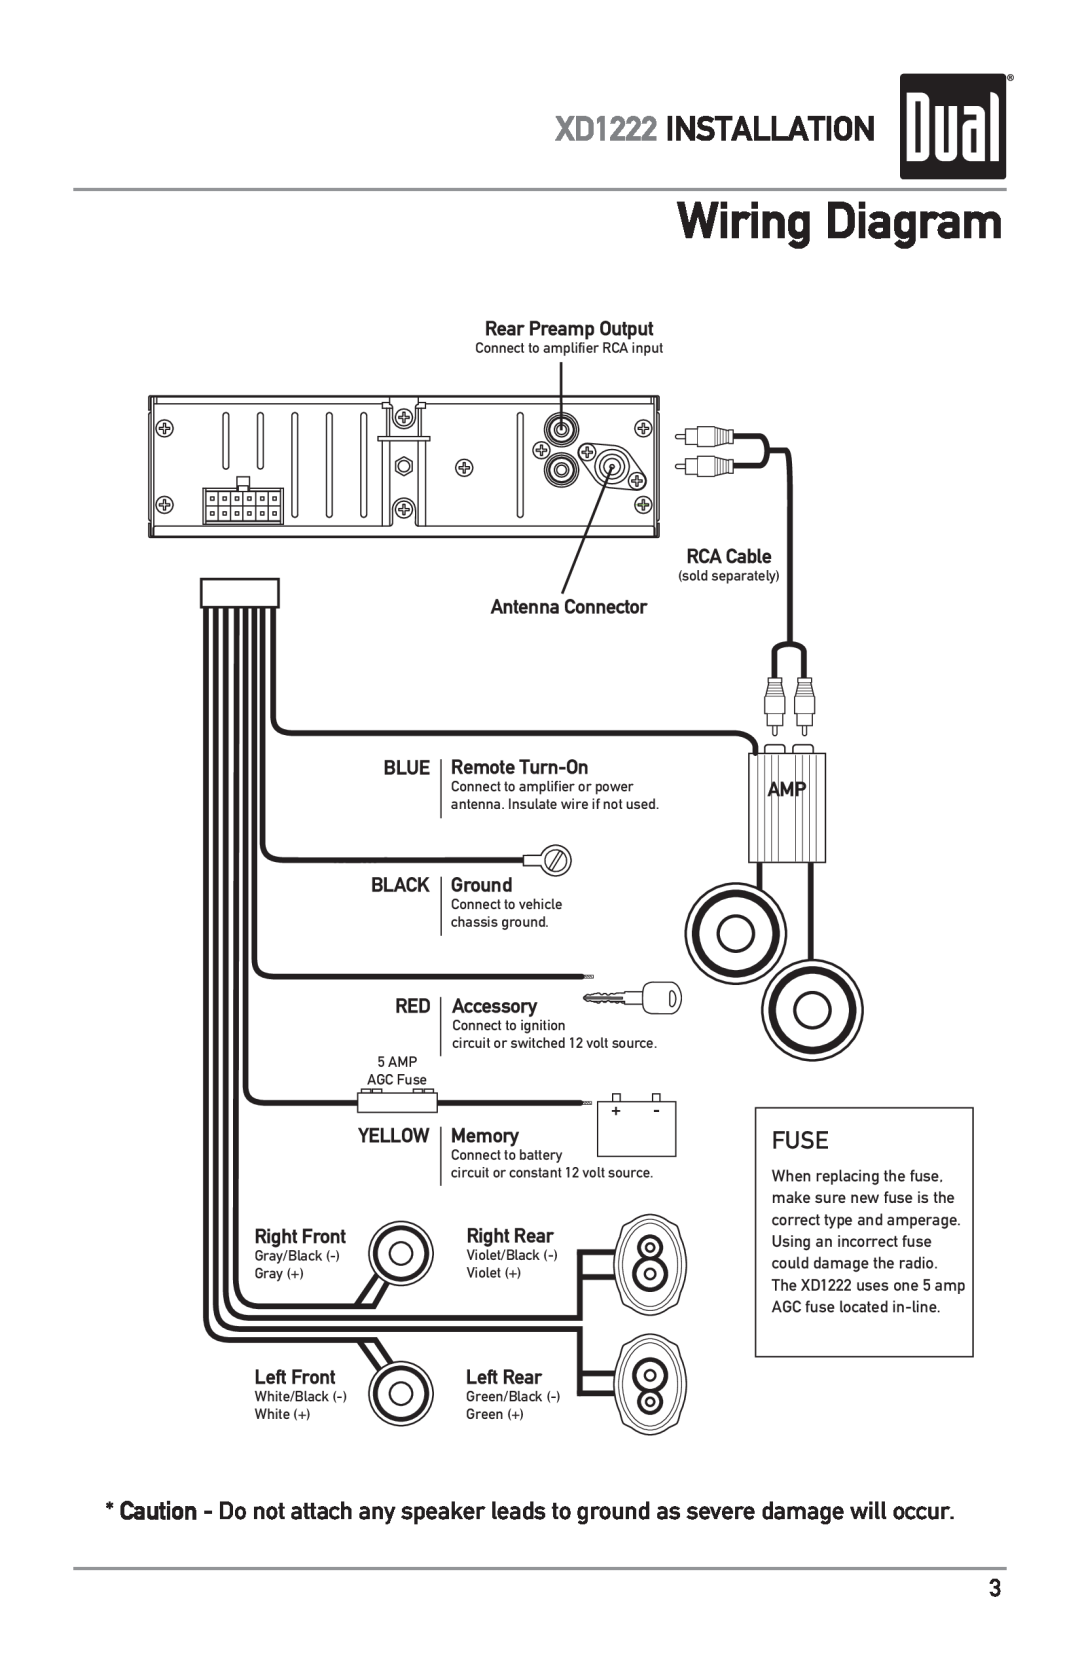 Dual owner manual Wiring Diagram, XD1222 INSTALLATION, Fuse 